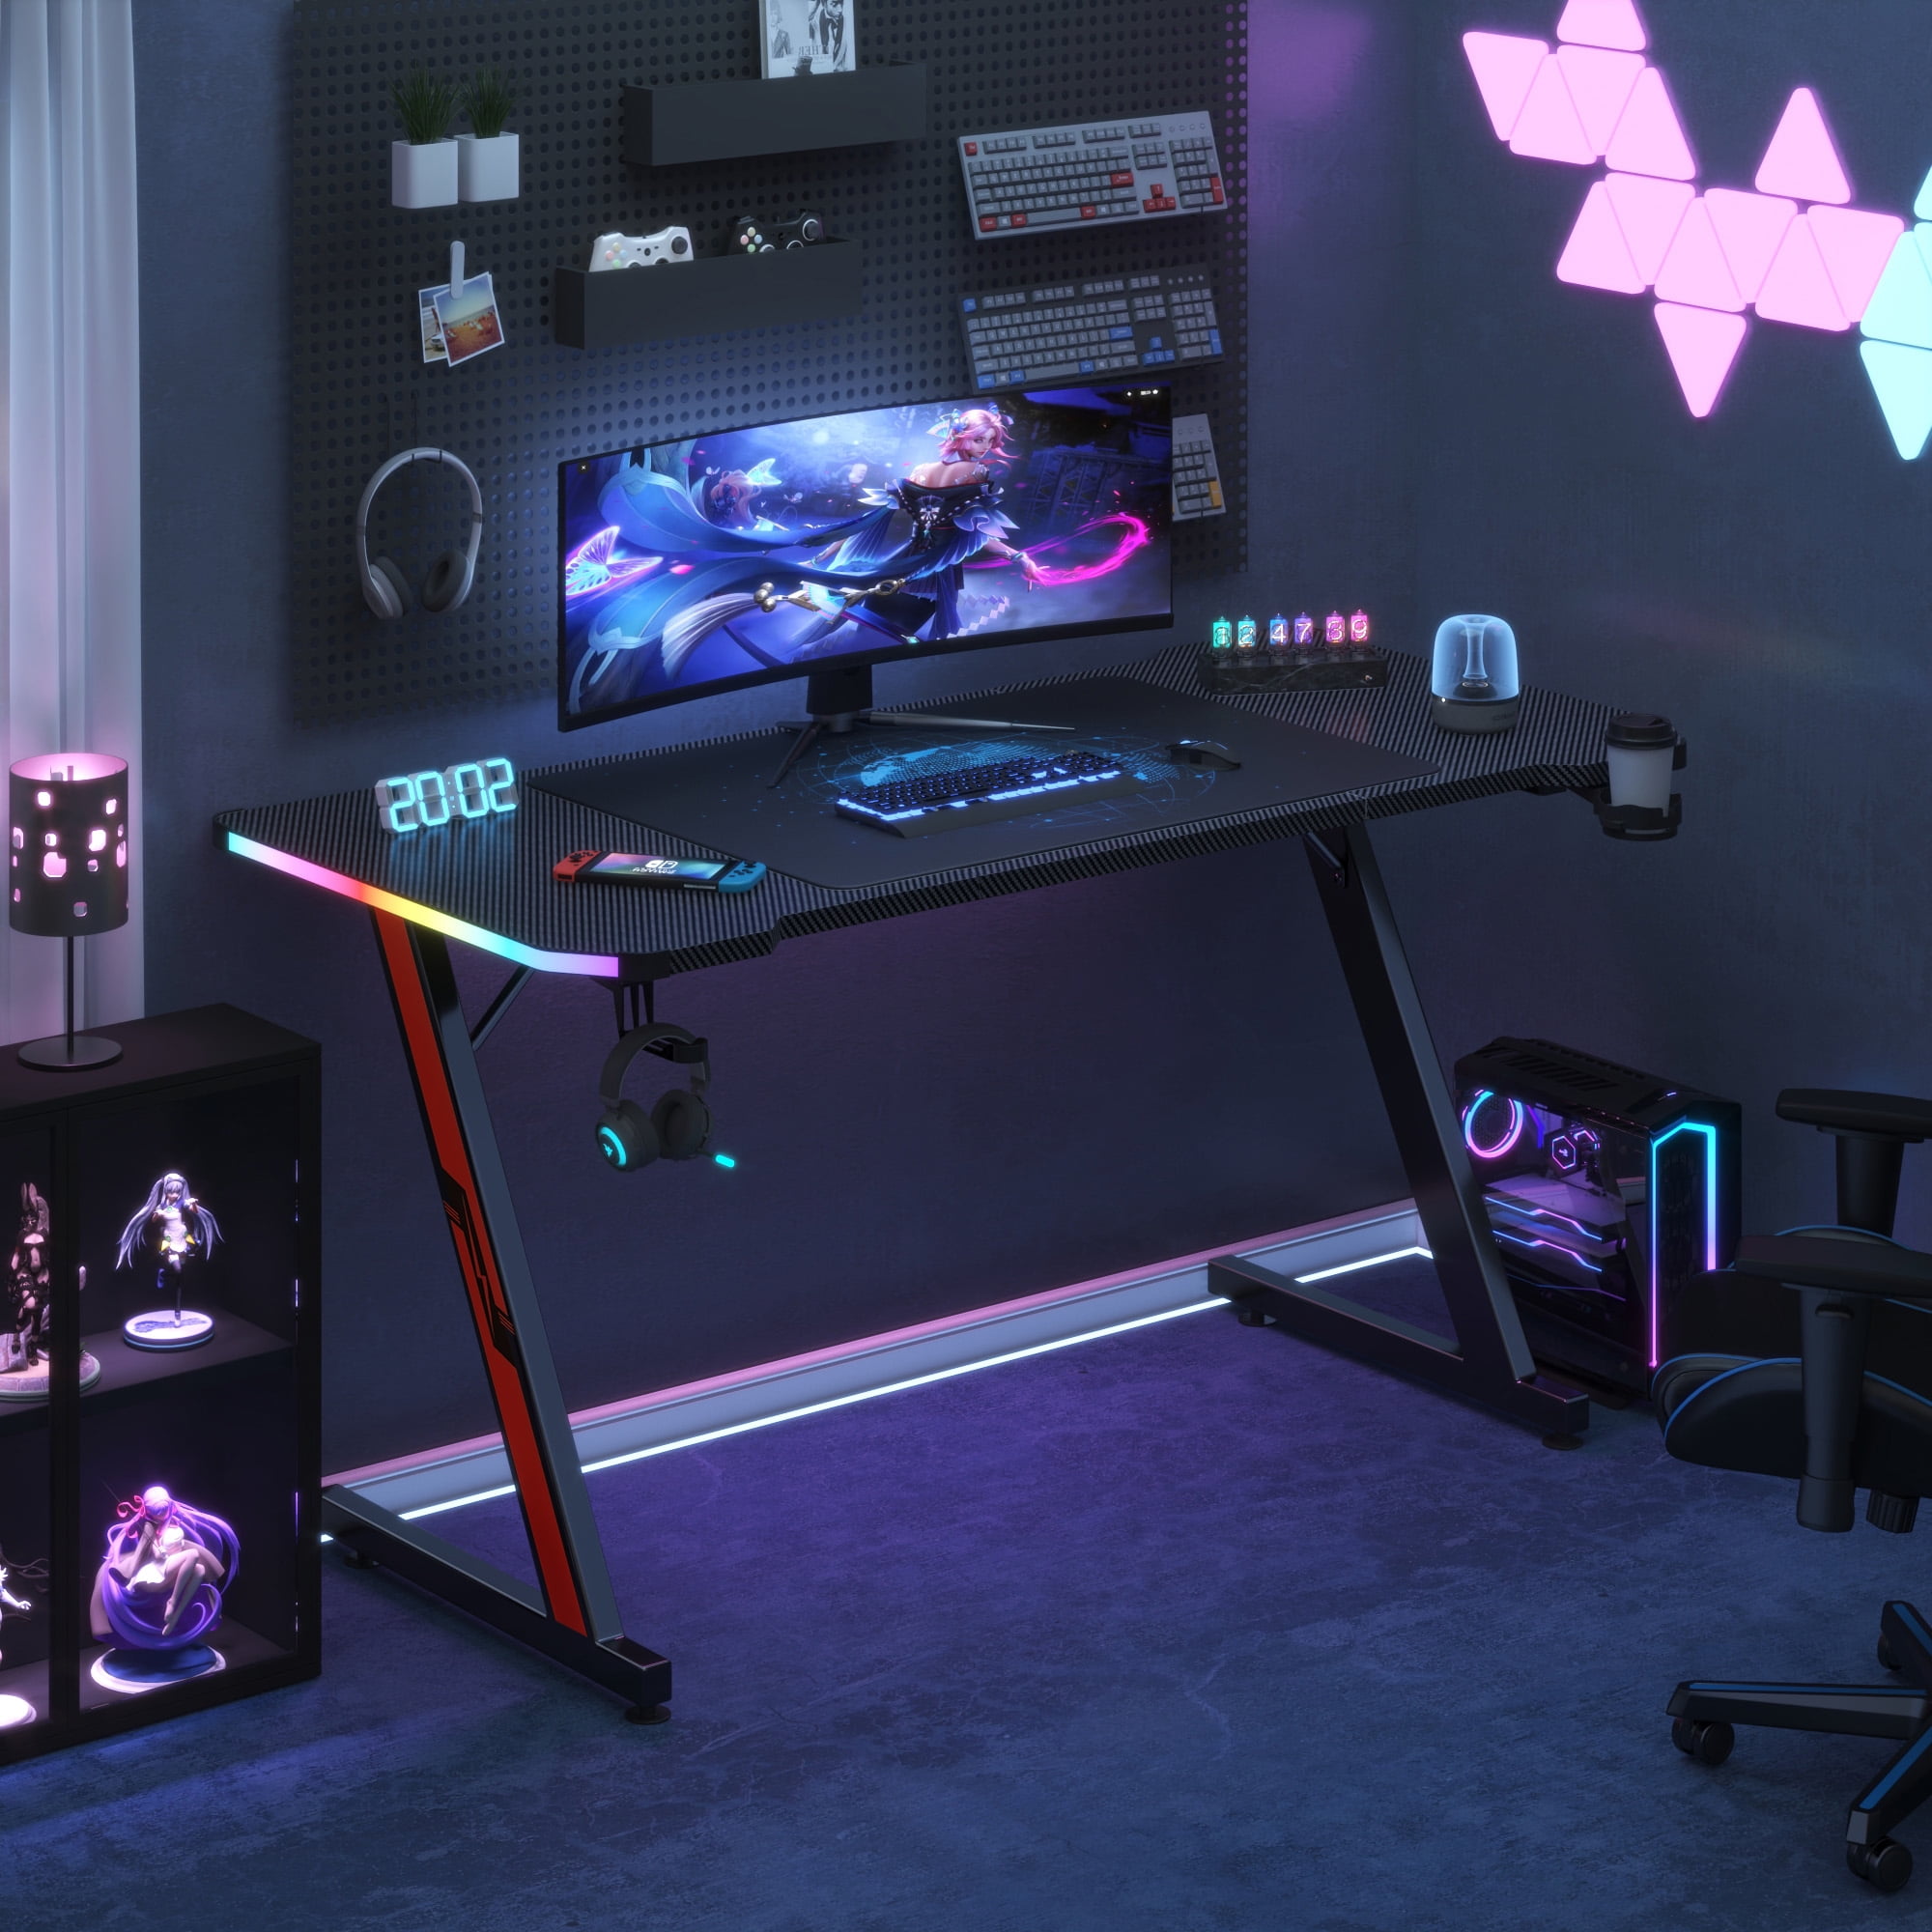 Ergohabit Customizable LED Light up RGB Monitor Stand Gaming Desk  Accessories